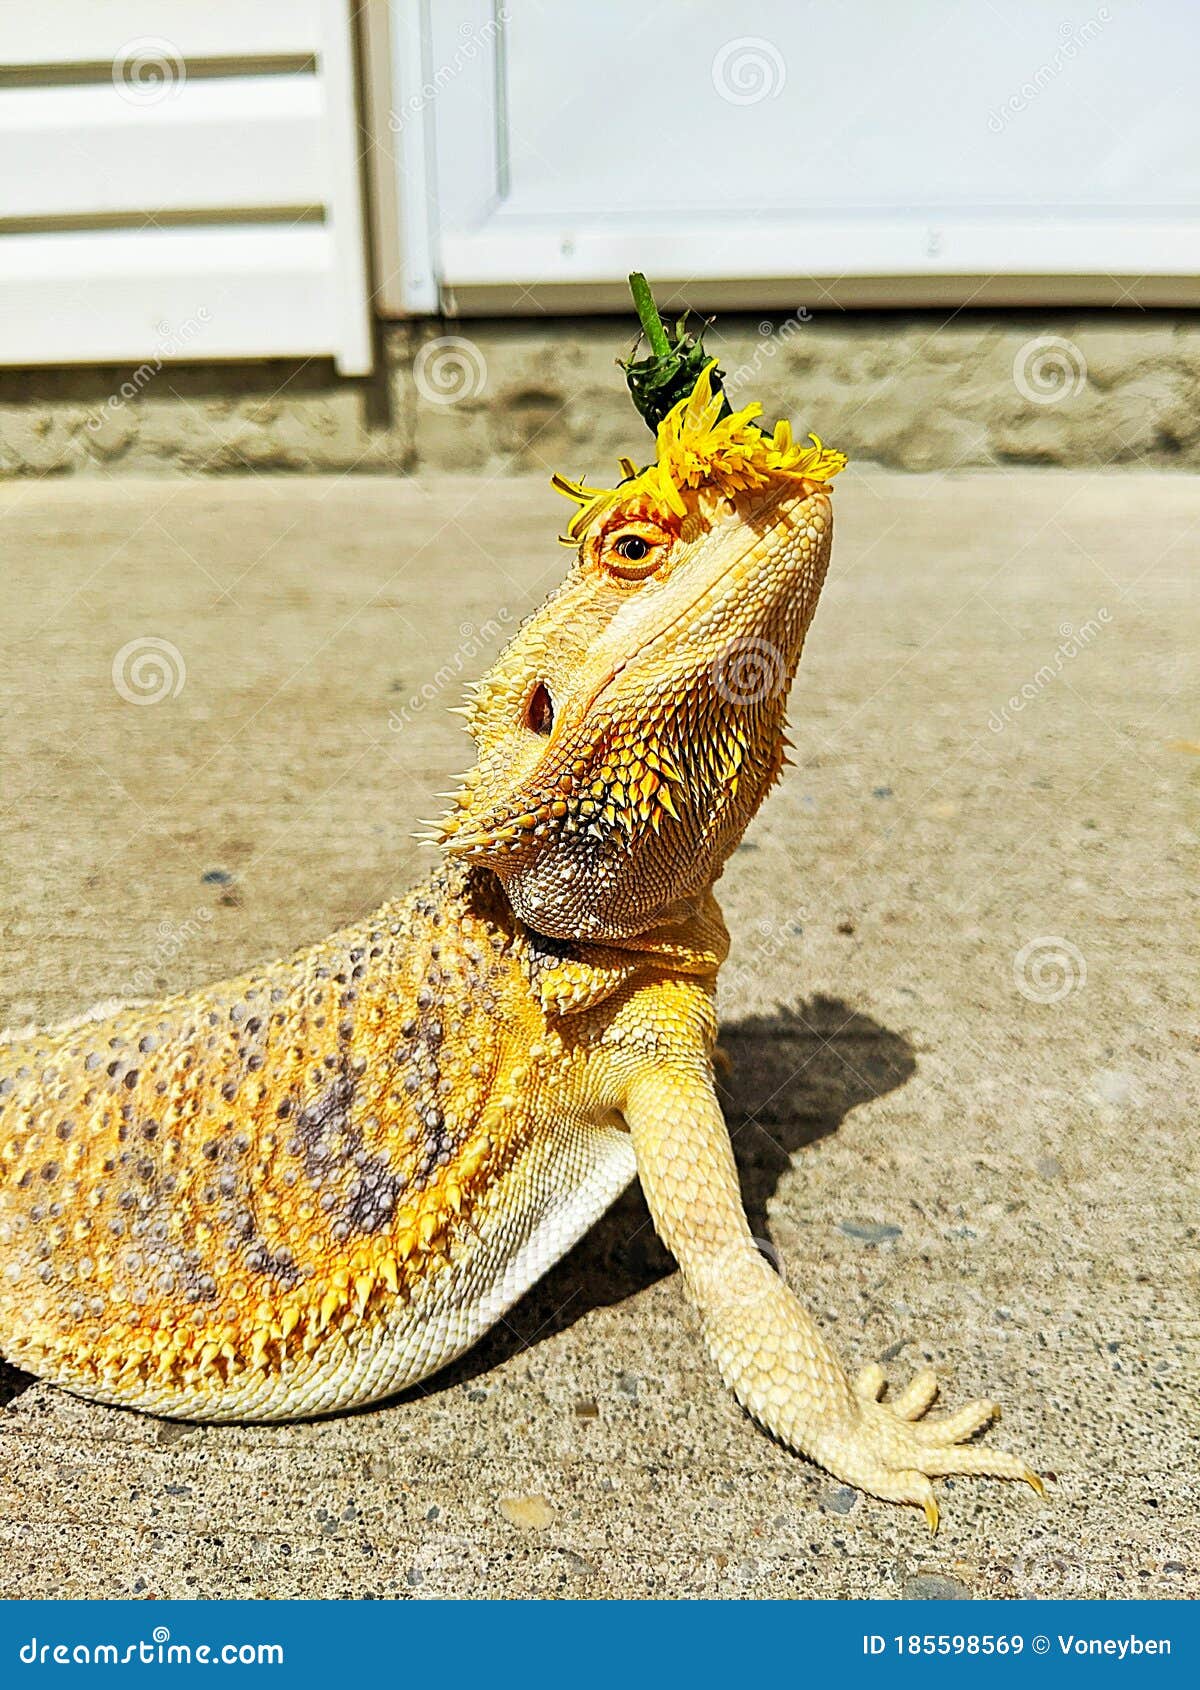 Bearded Dragon Basking in the Sun Wearing a Dandelion Hat Stock Image